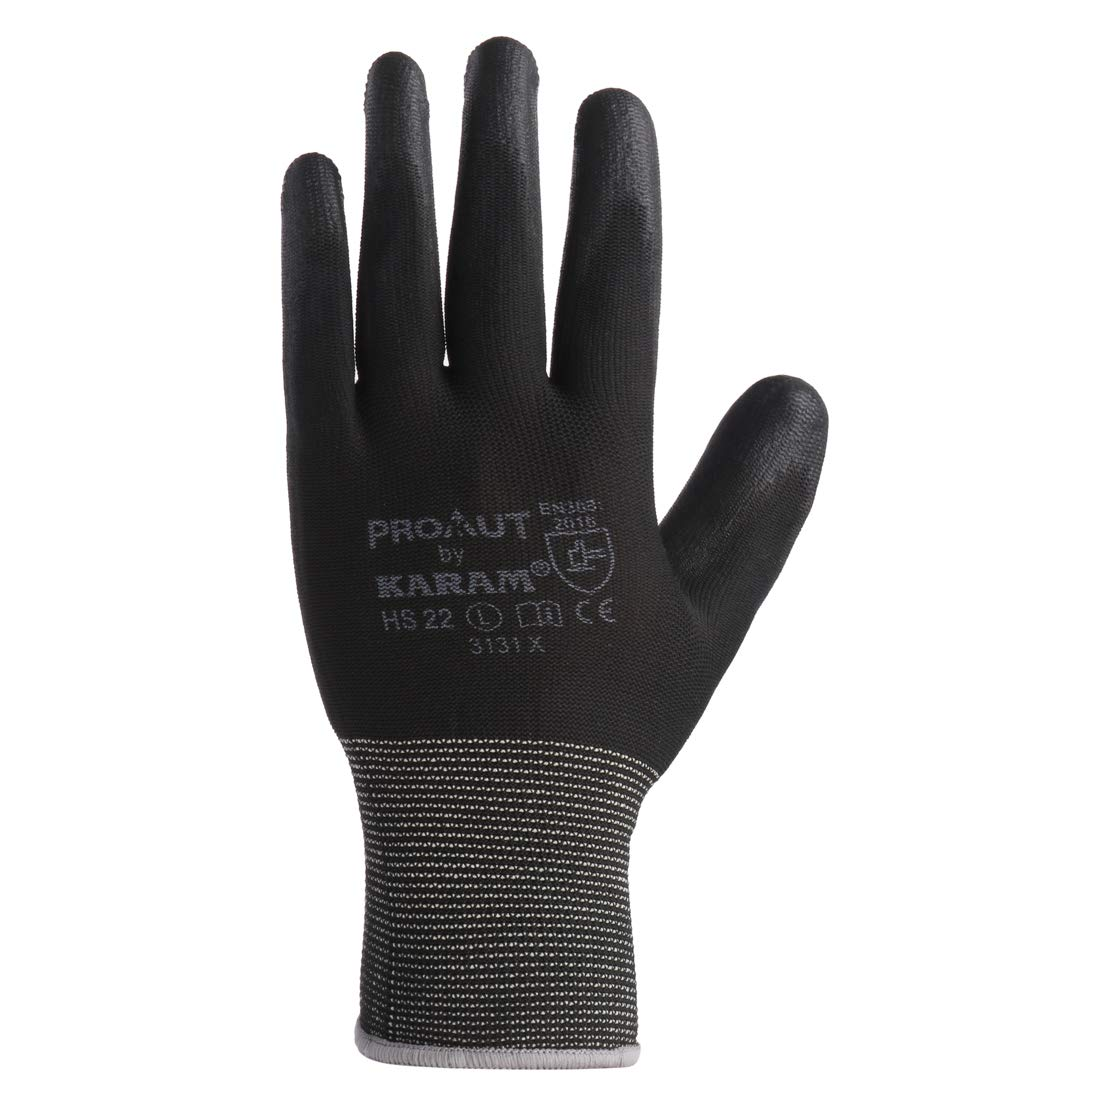 Karam Safety gloves HS 22 1